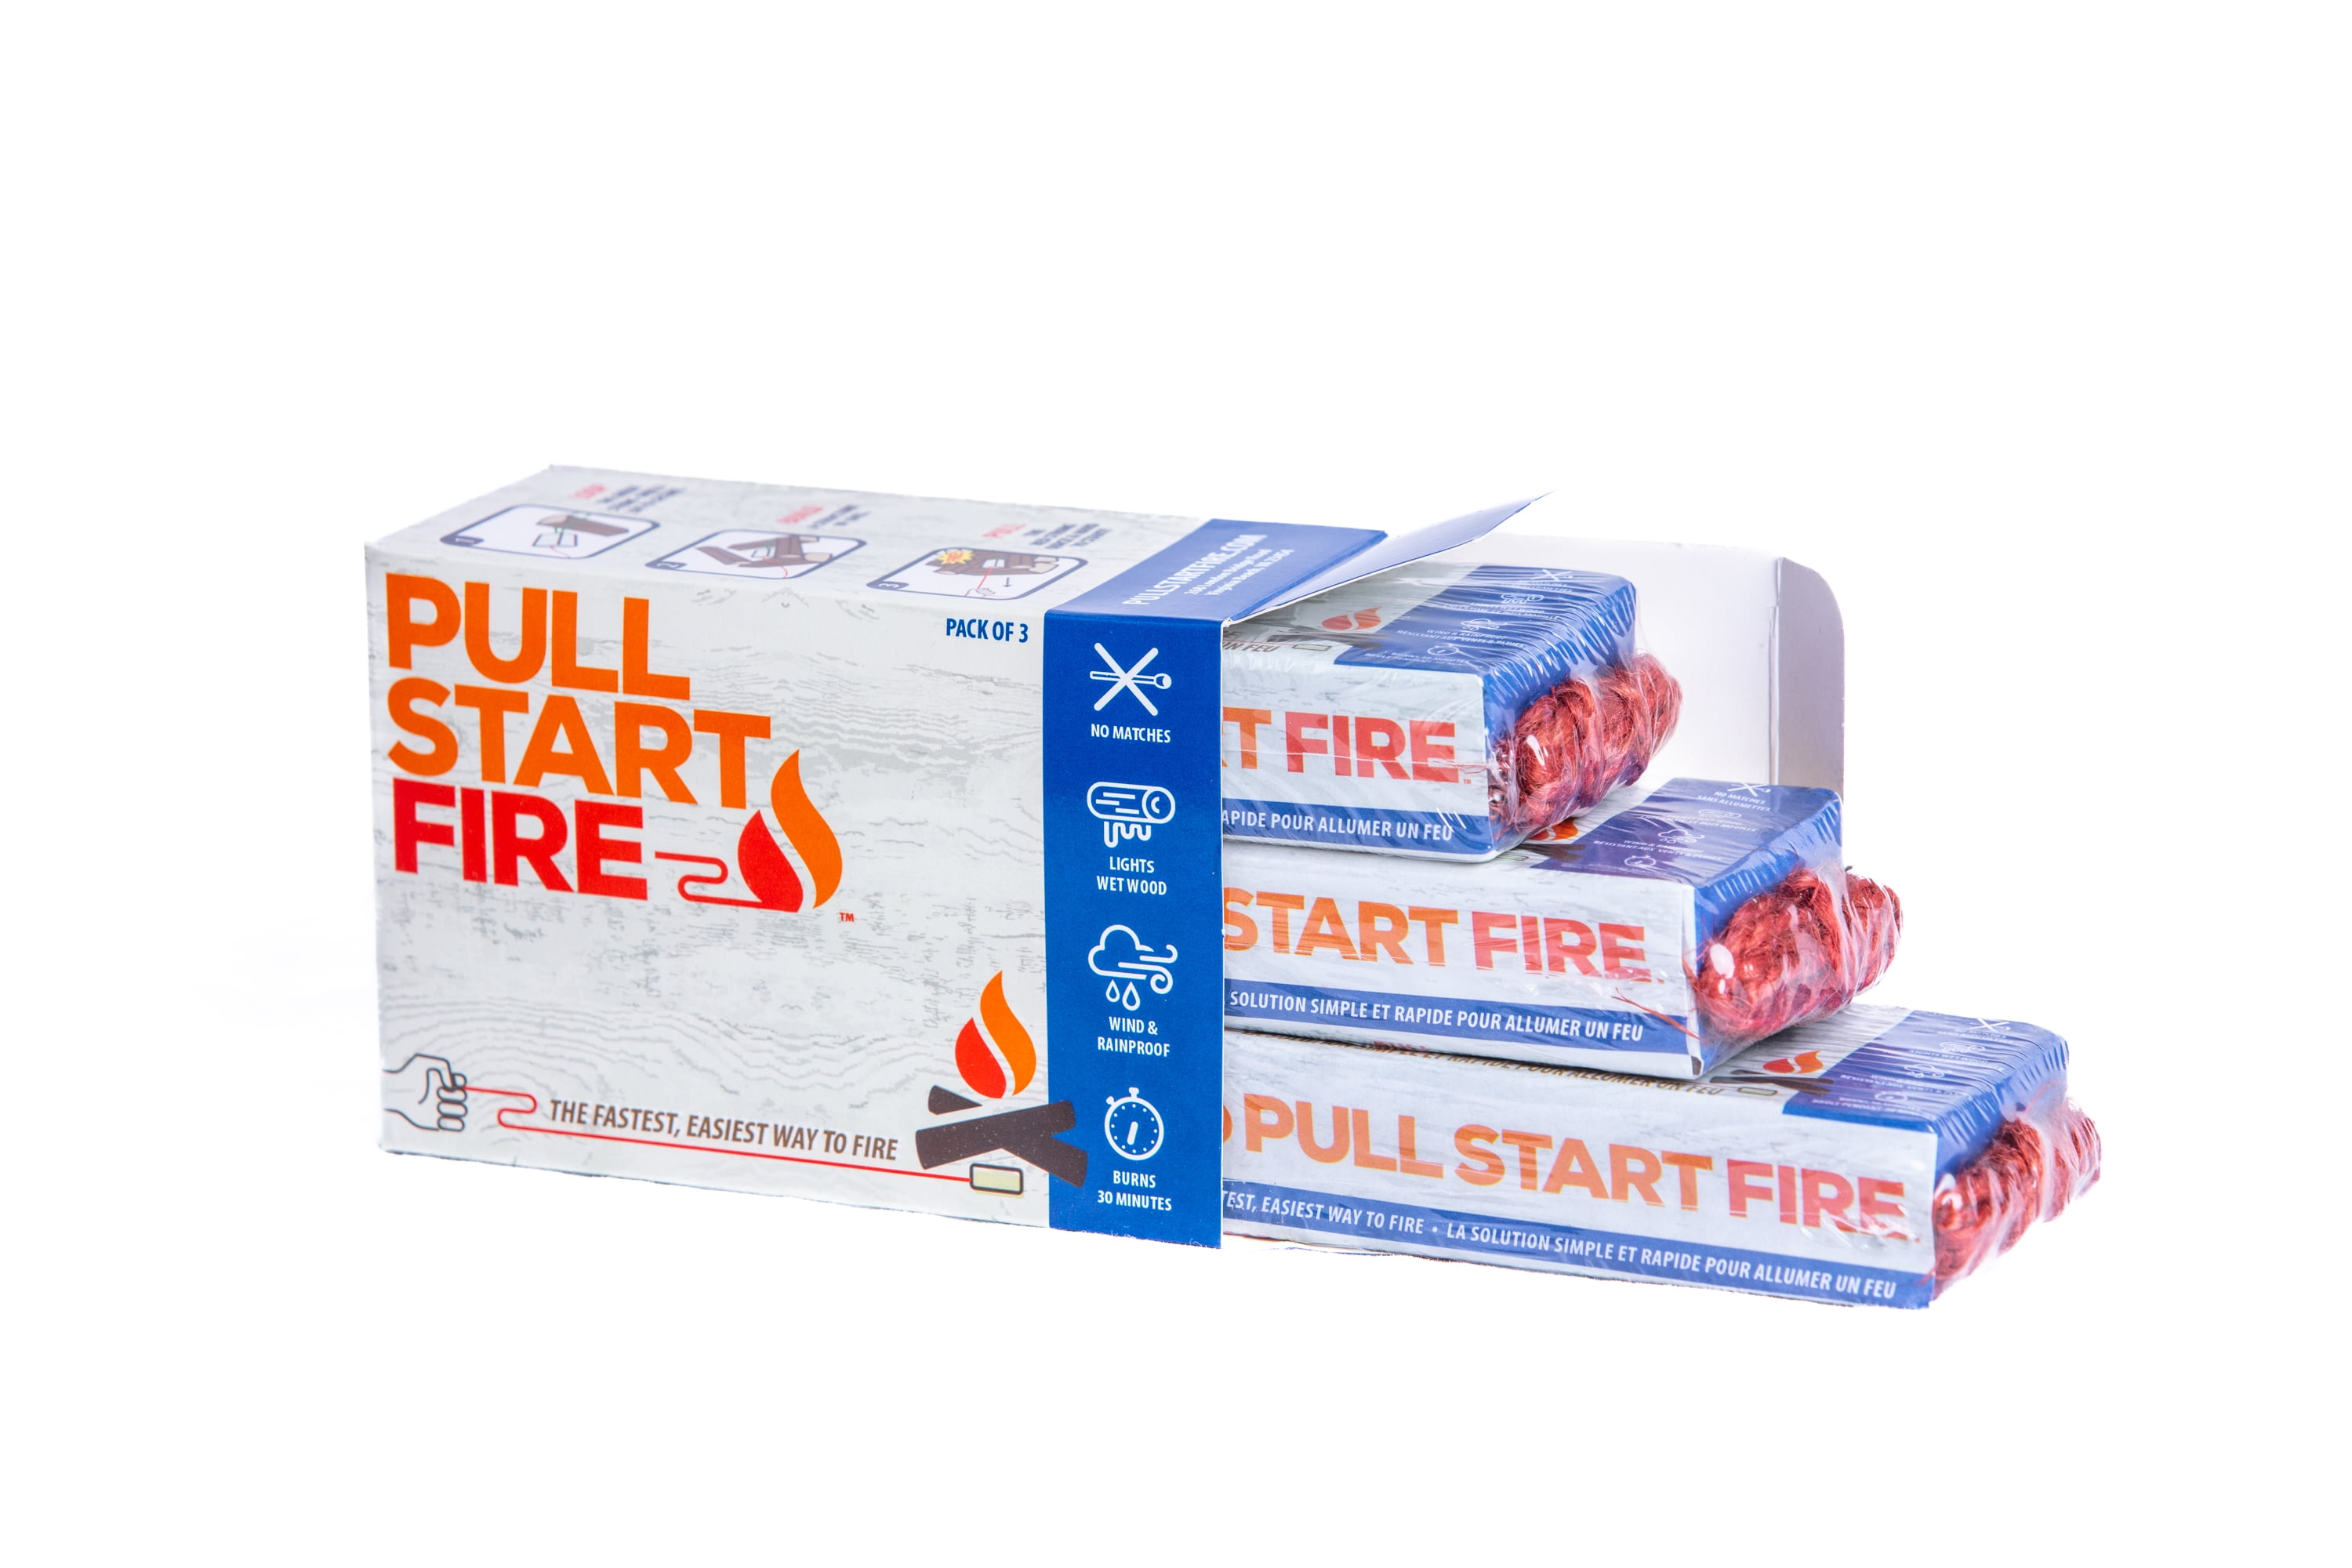 Pull Start Fire 4012458 Wax Fire Starter - Pack of 3 - Case of 16